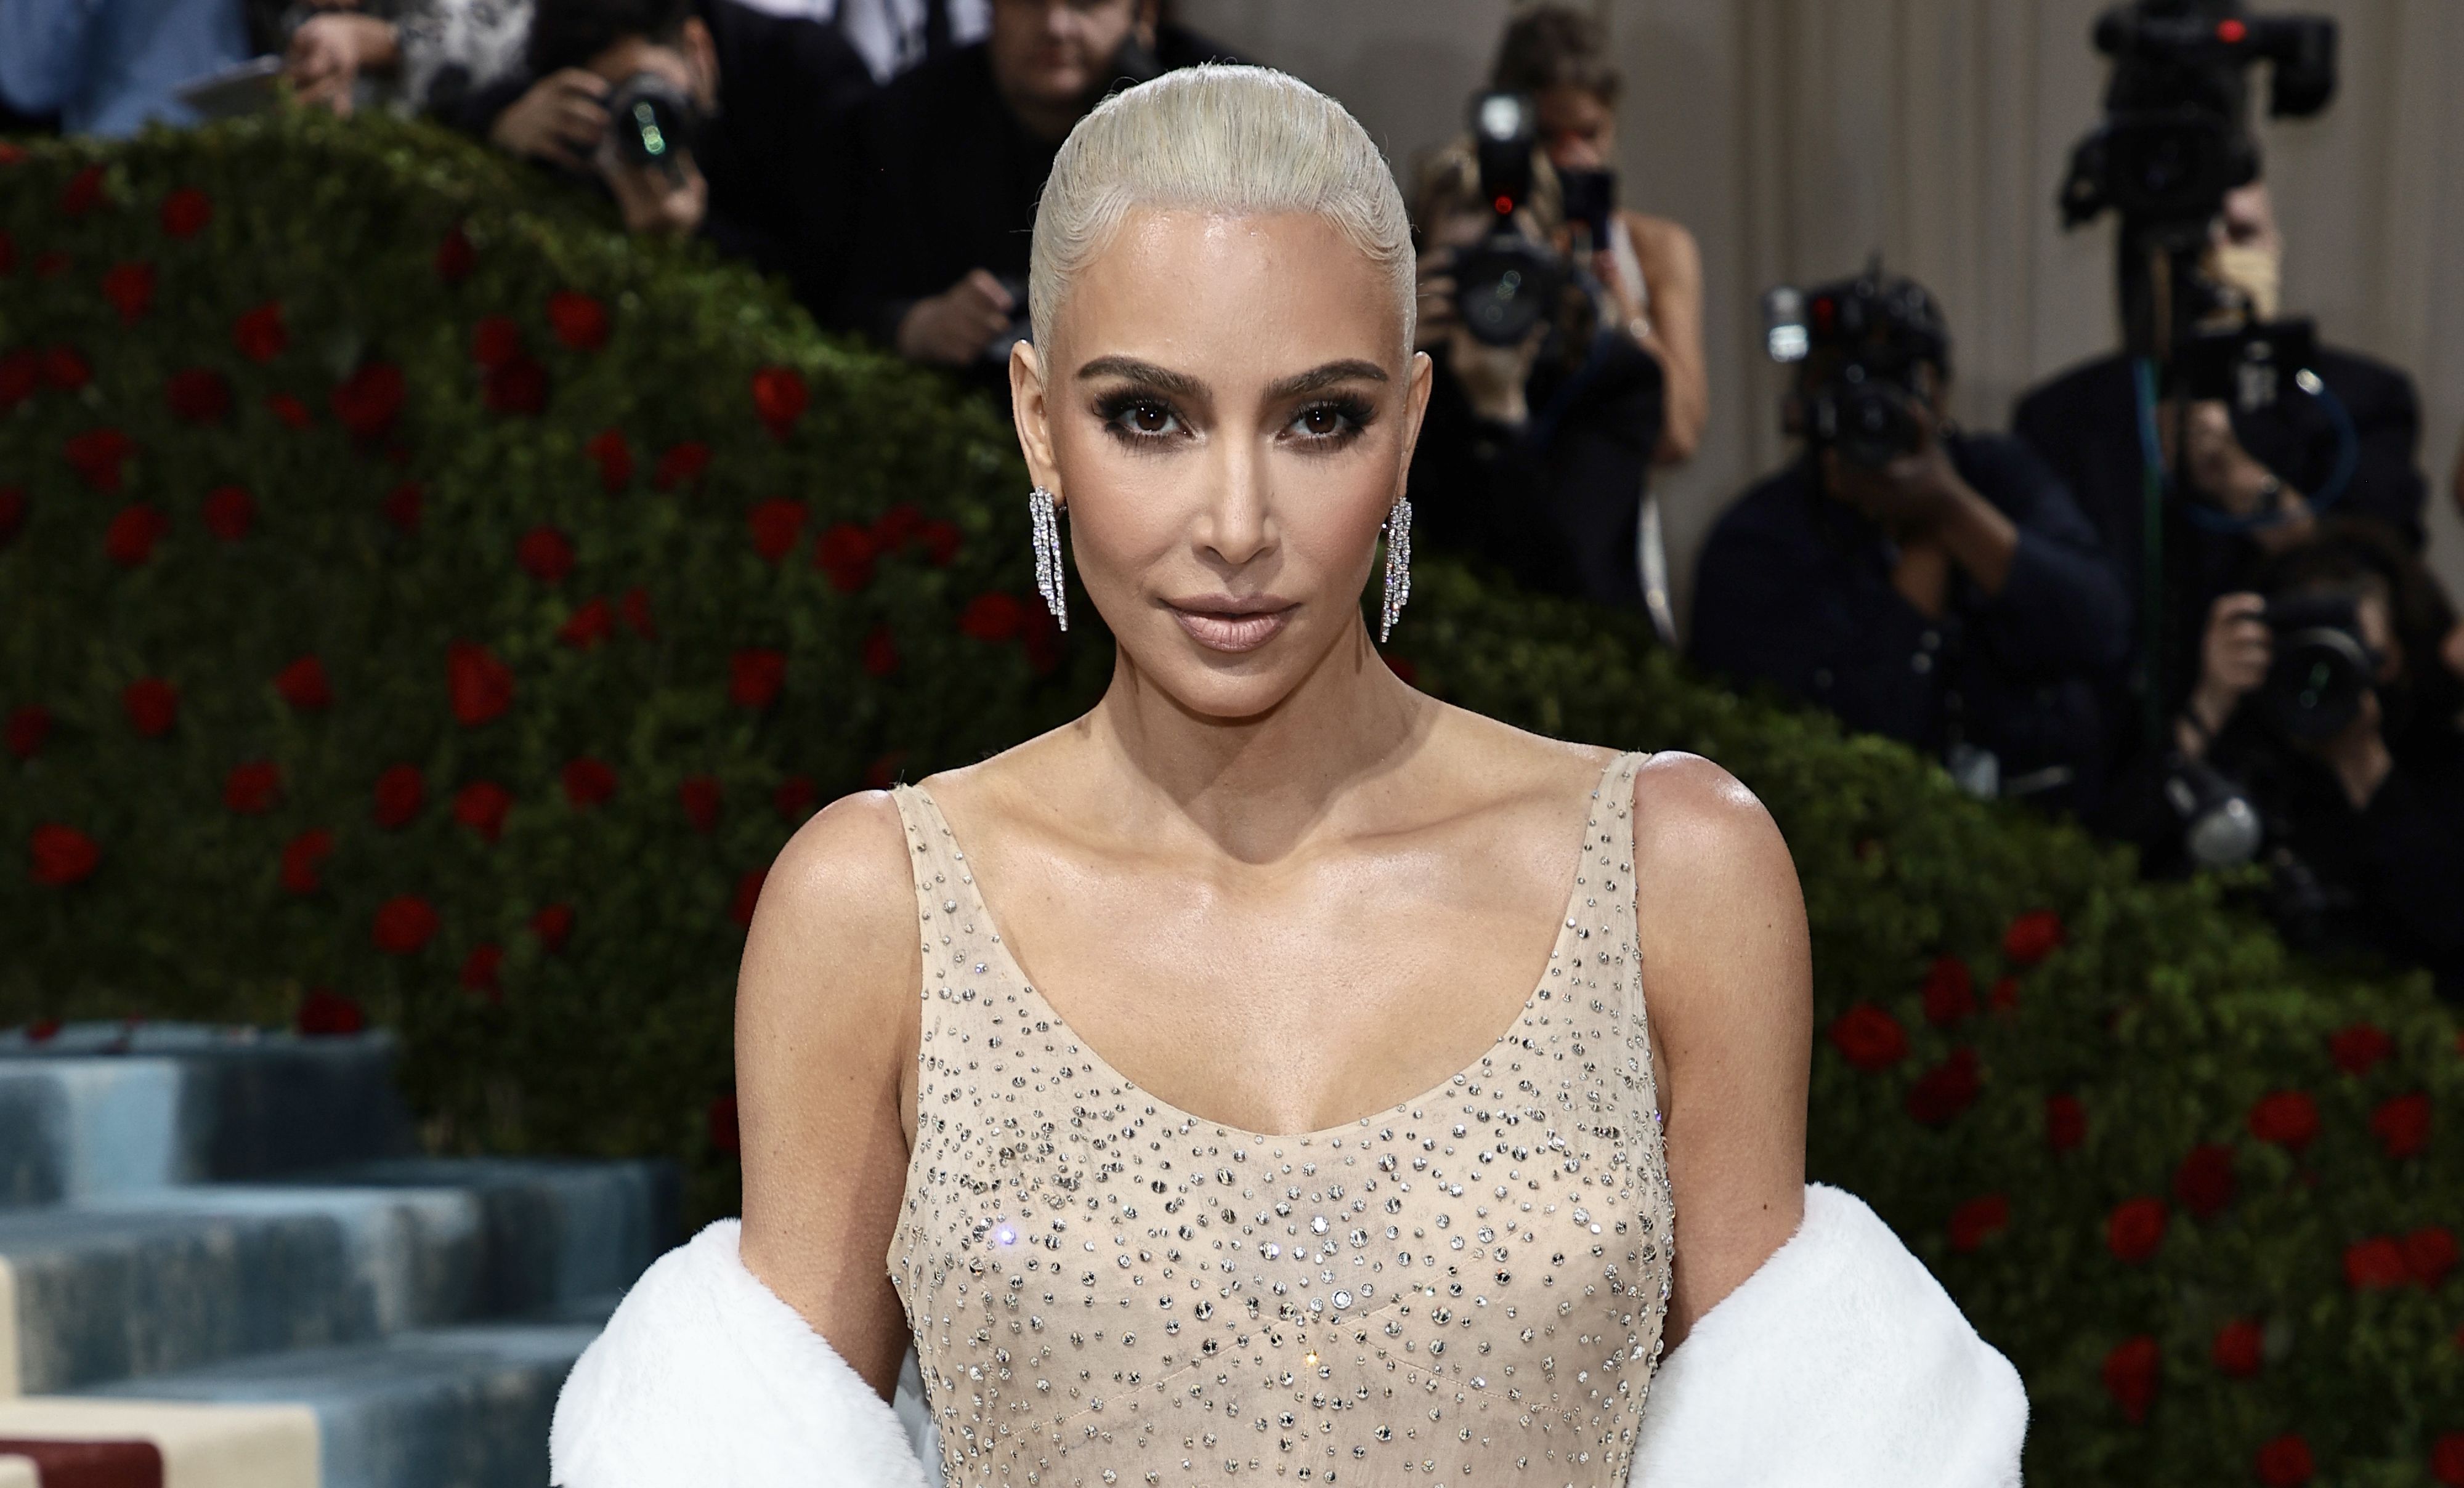 Kim Kardashian 'did not damage' Marilyn Monroe's dress, according